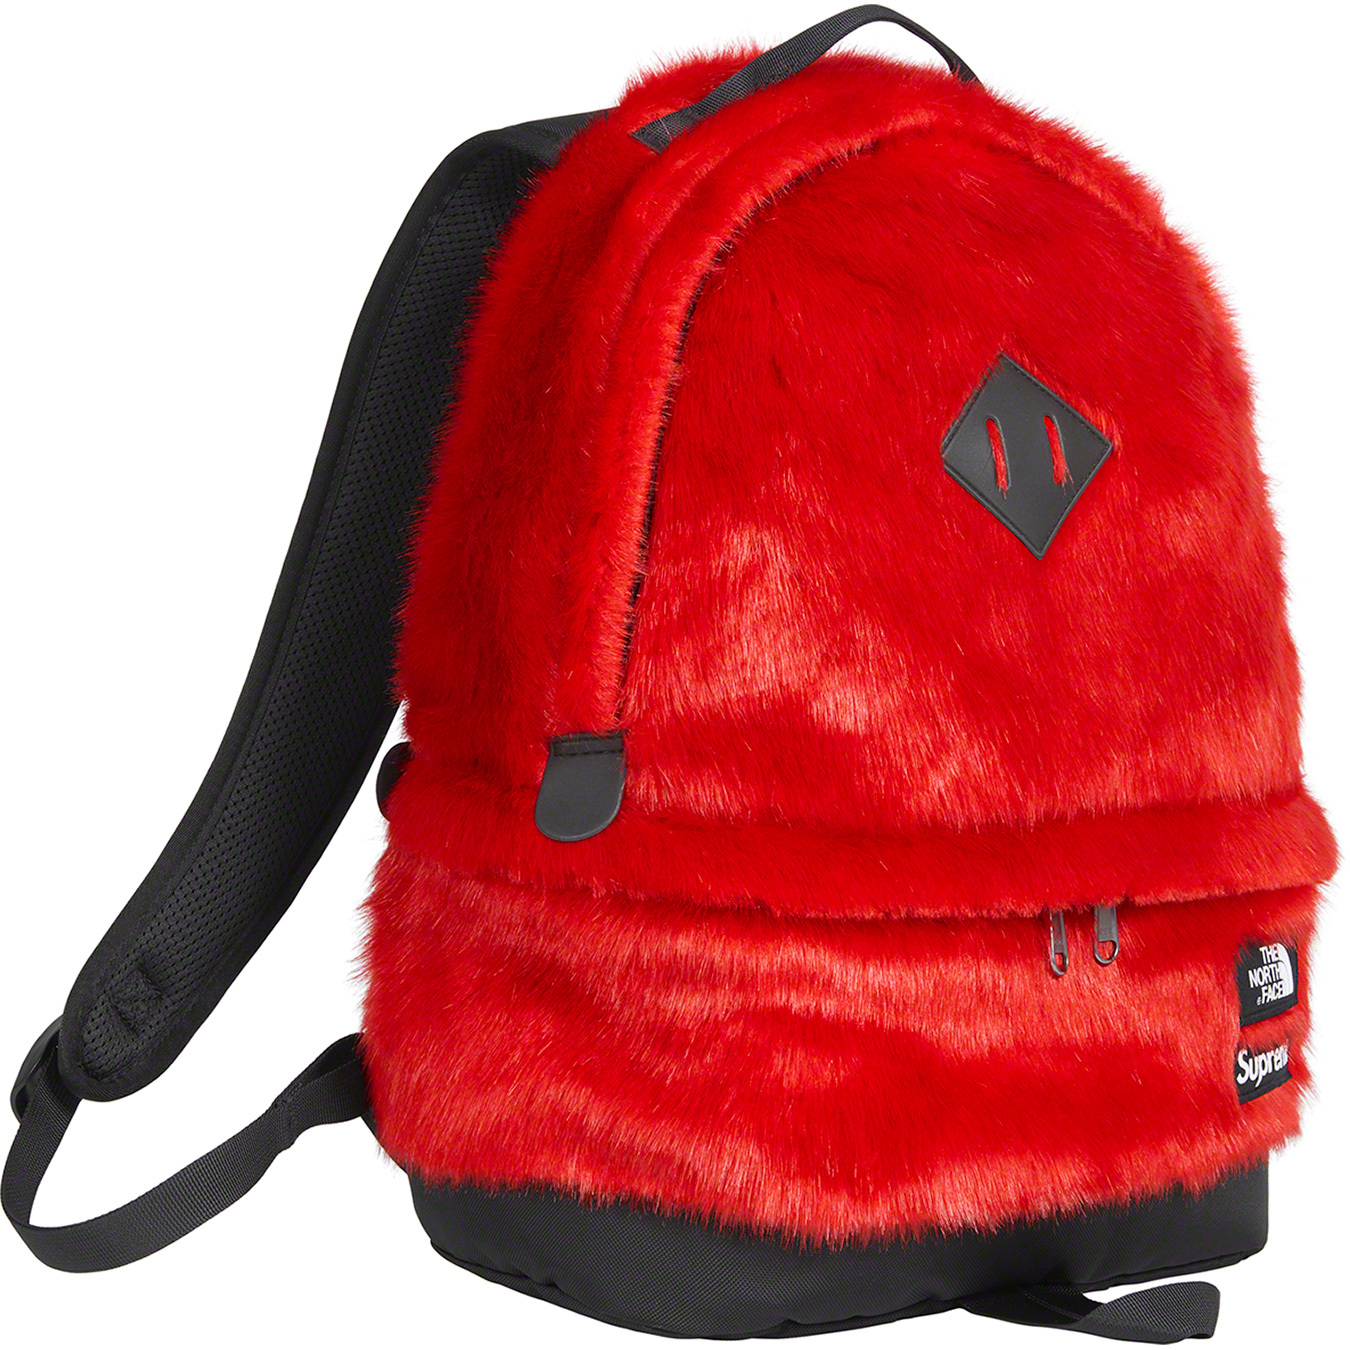 supreme north face faux fur backpack